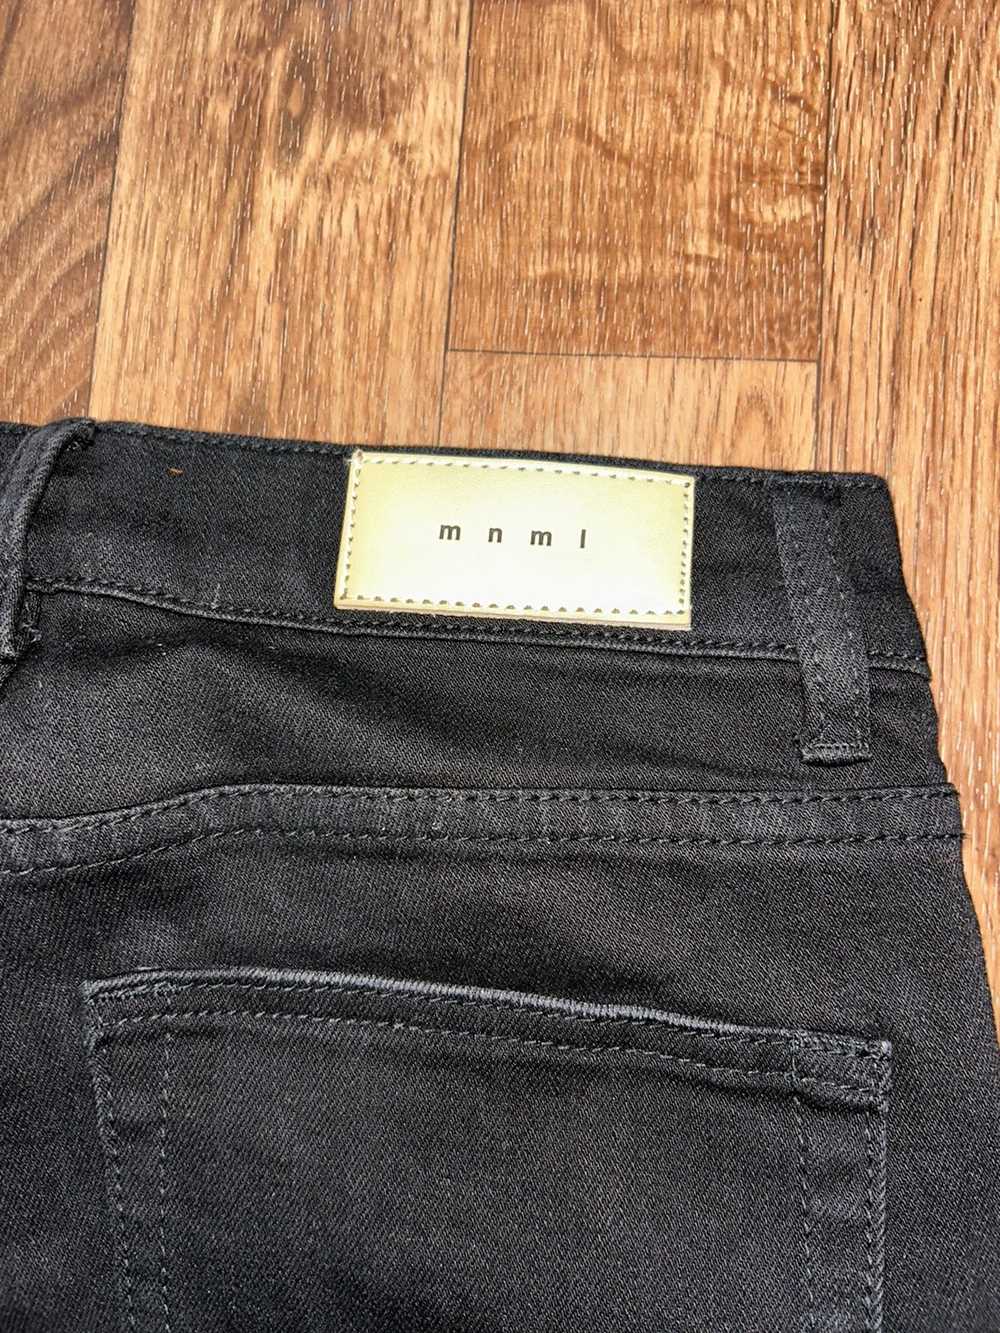 MNML × Streetwear Mnml red bandana patch jeans - image 3